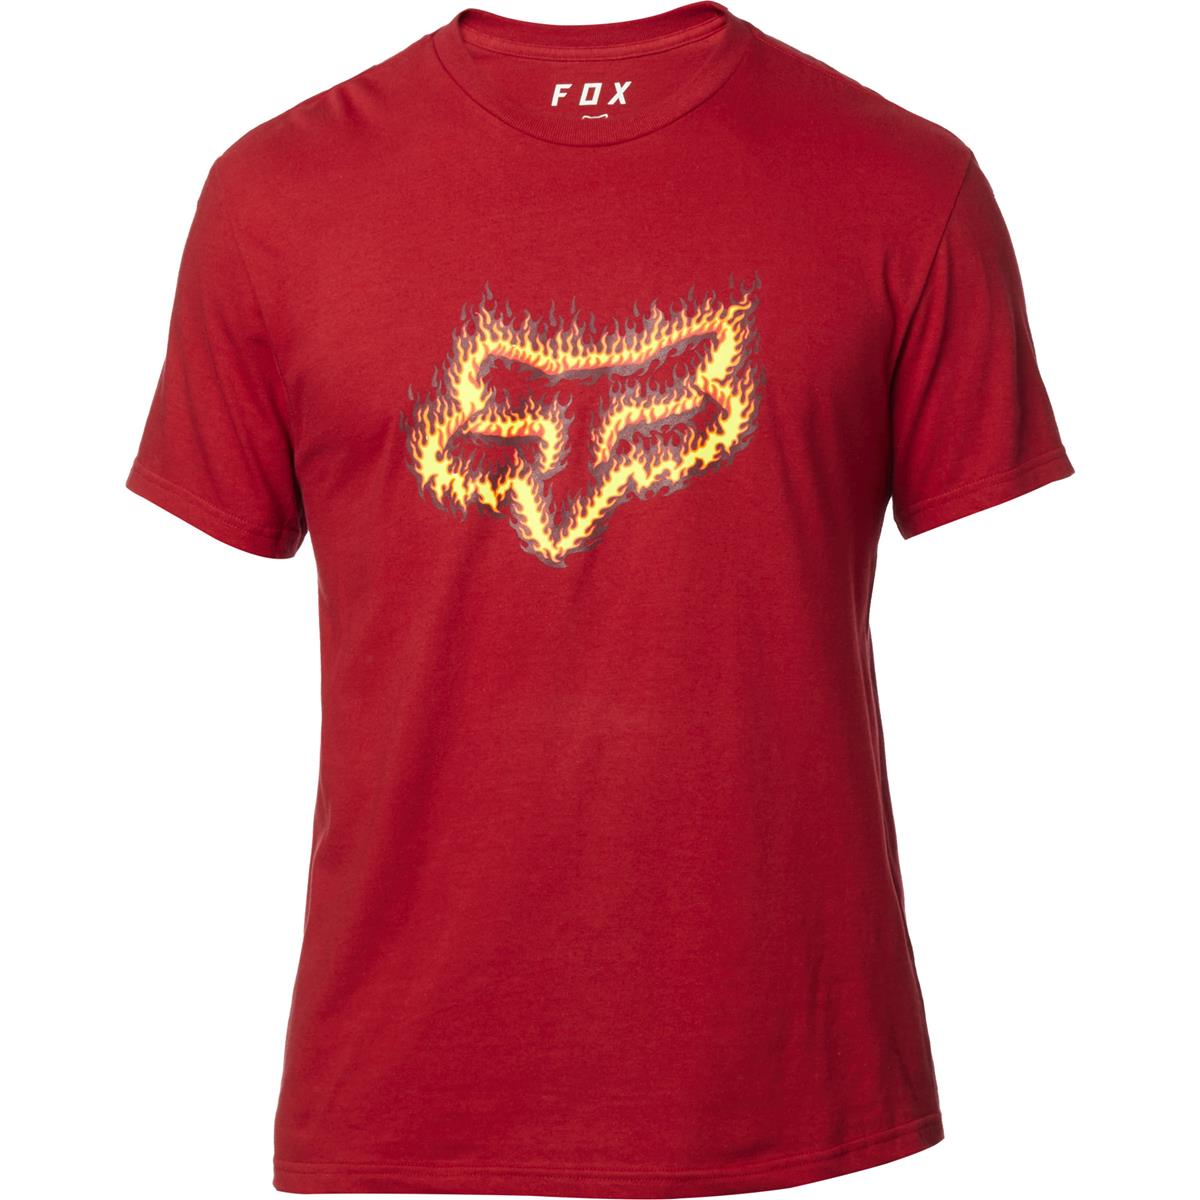 Fox T-Shirt Flame Head Cardinal